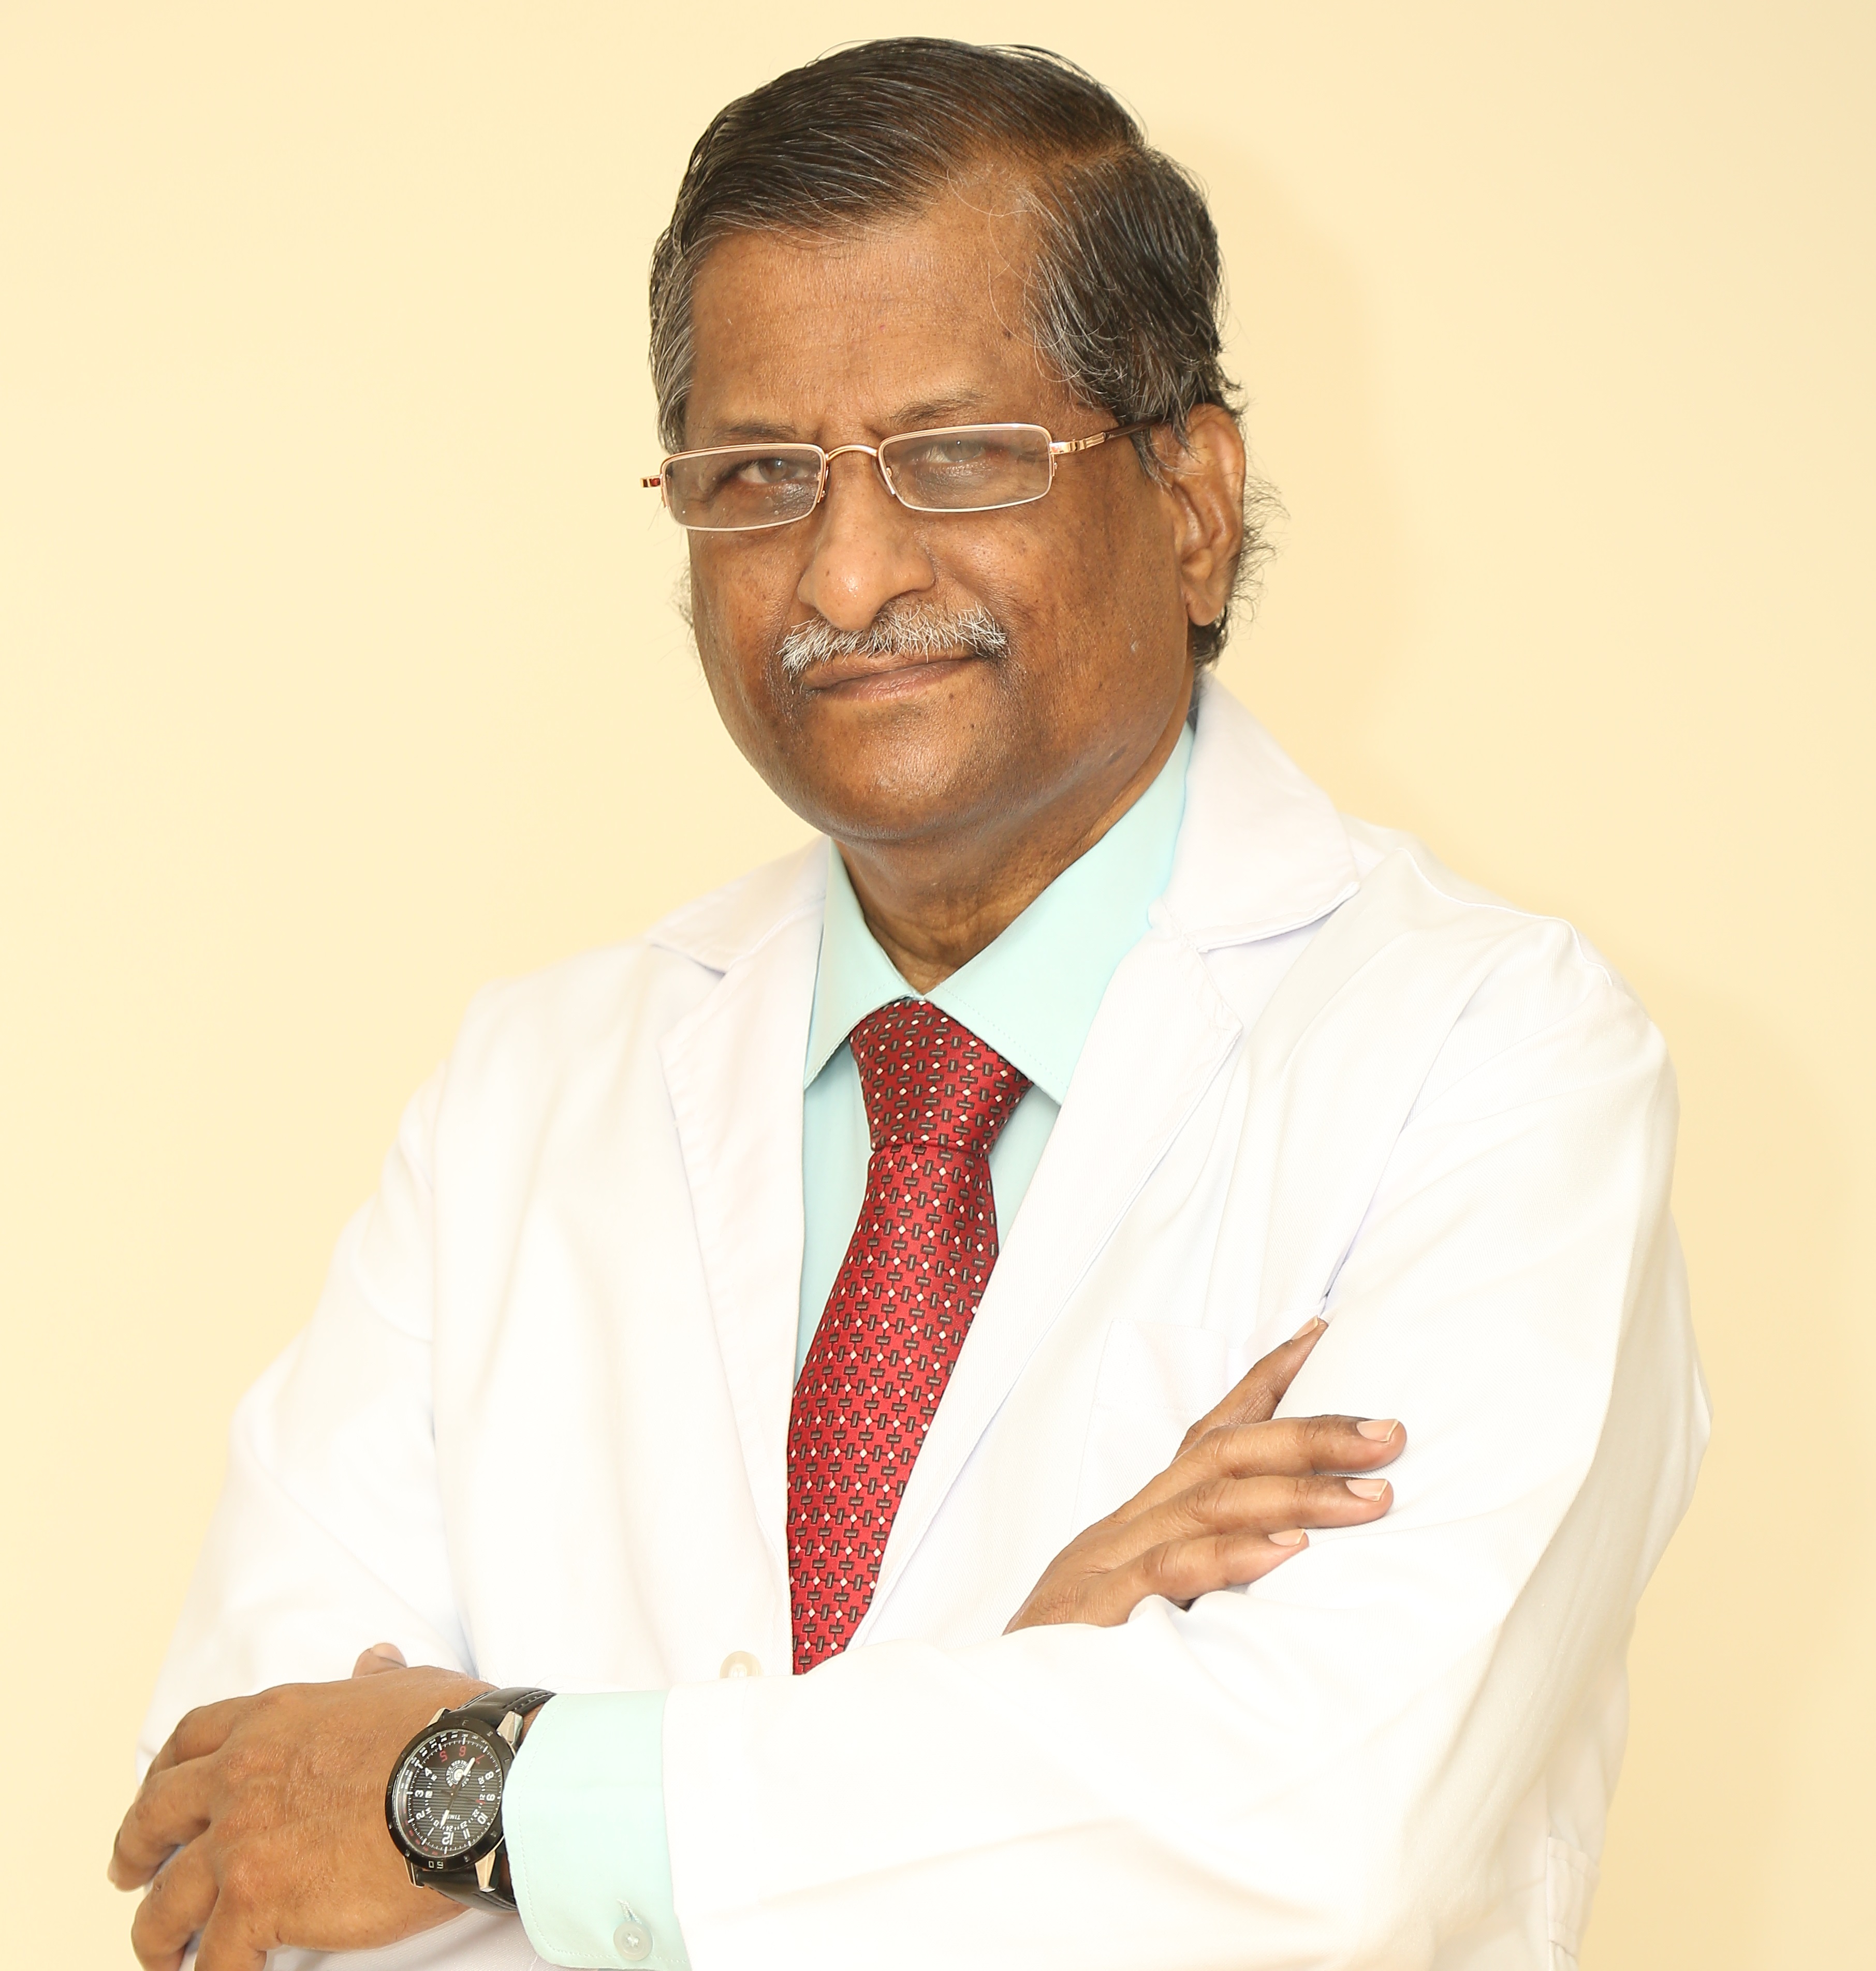 Gopal Sanjeevi博士